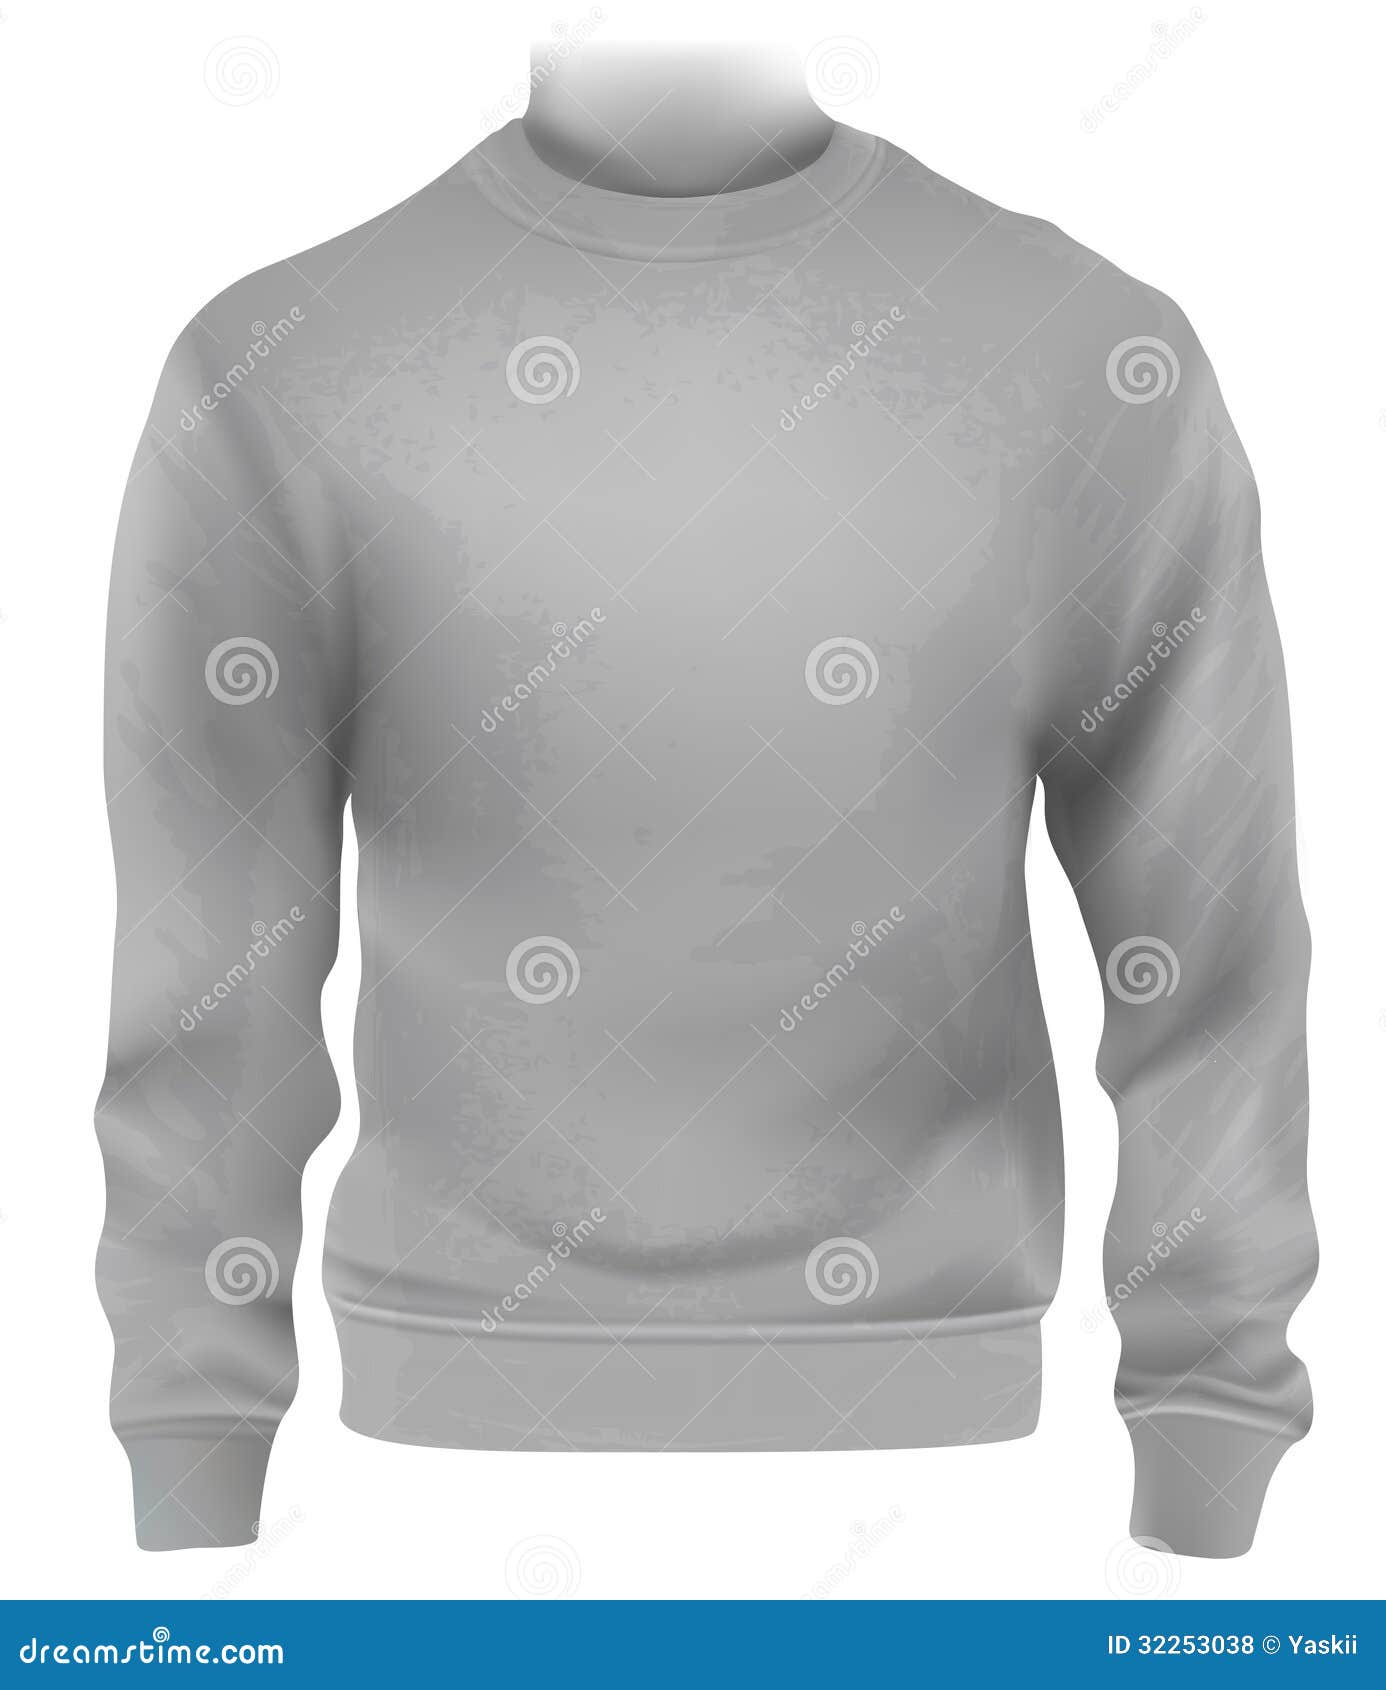 Man sweatshirt template stock vector. Illustration of blank - 32253038